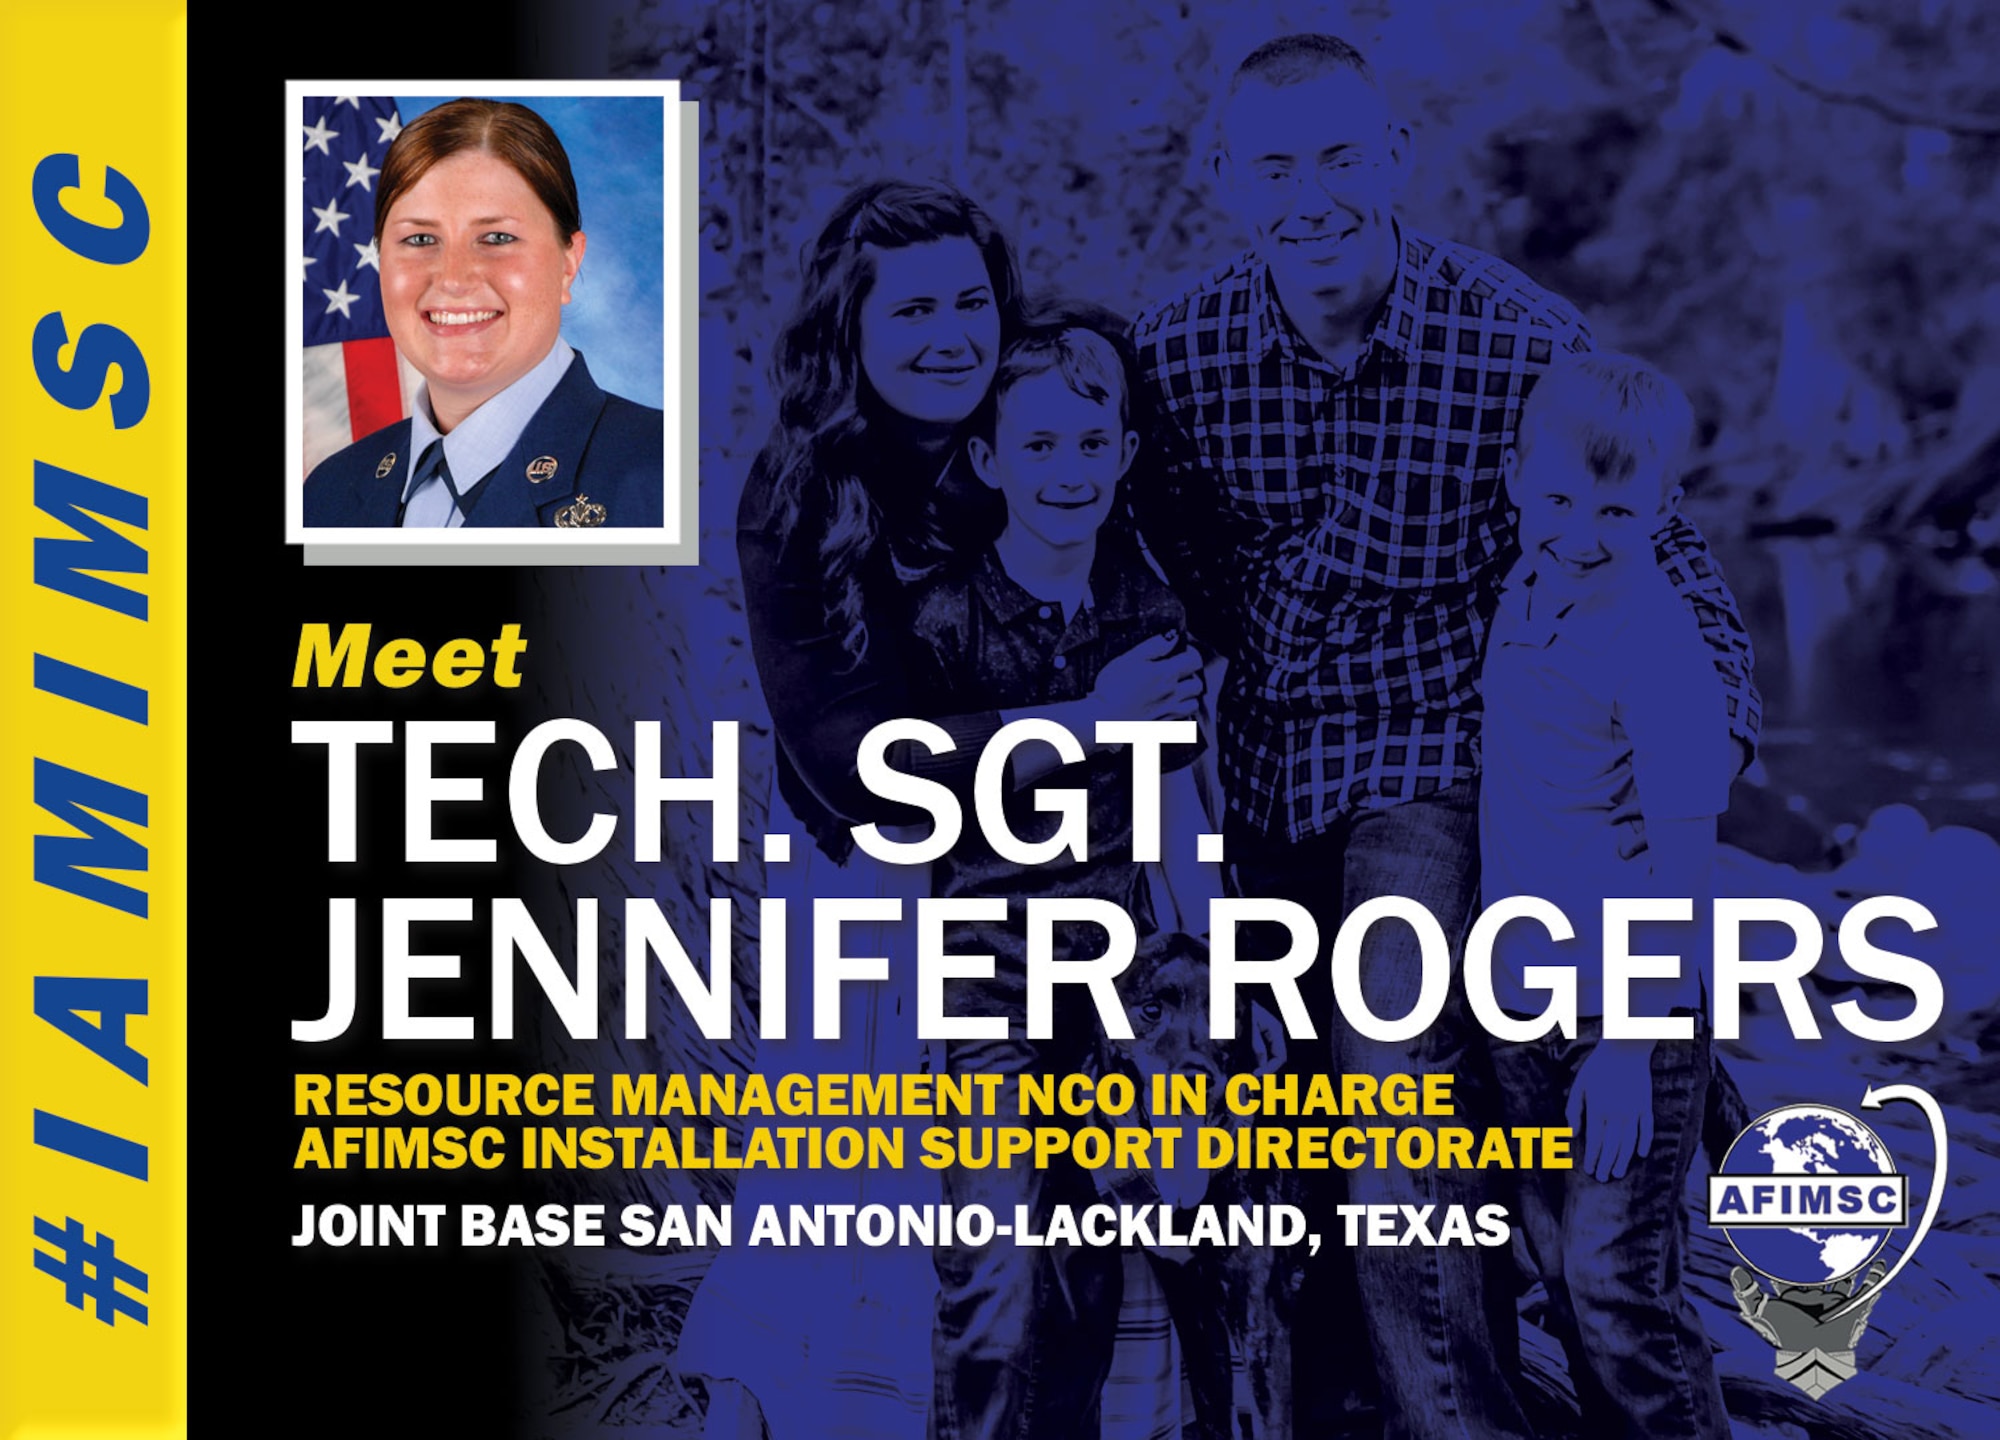 Tech. Sgt. Jennifer Rogers #IAMIMSC spotlight graphic